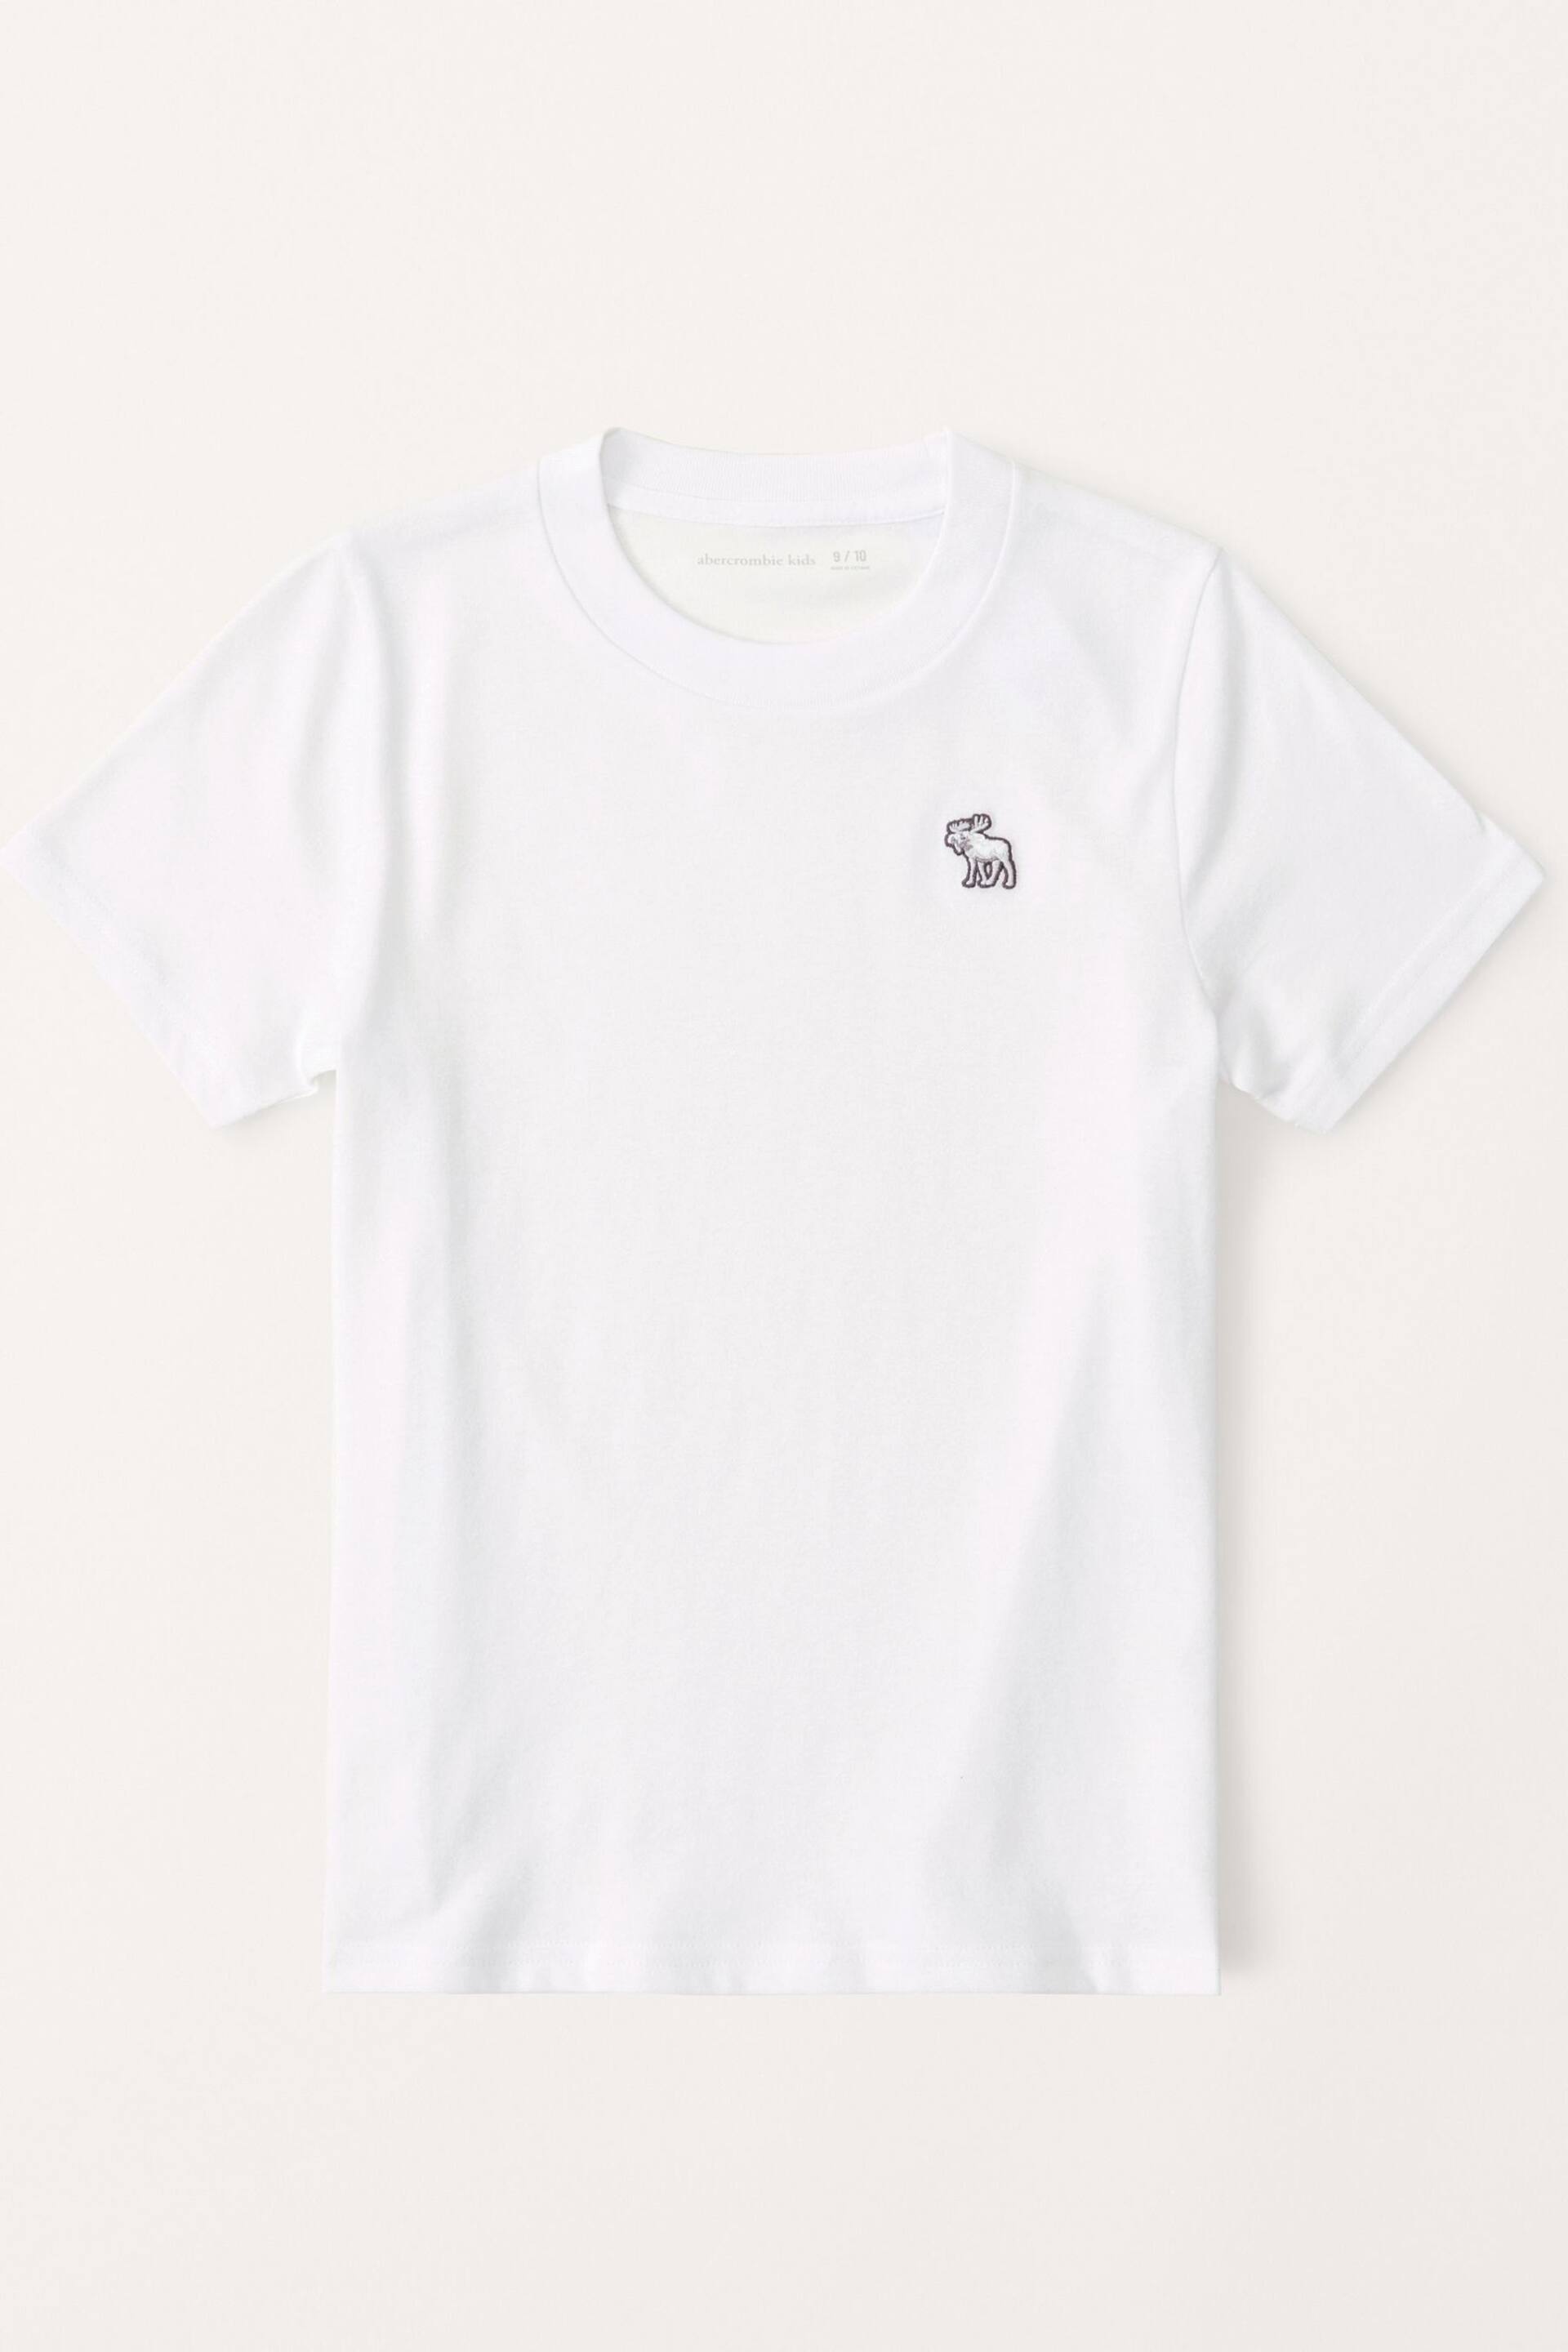 Abercrombie & Fitch Short Sleeve Logo White T-Shirt - Image 1 of 1